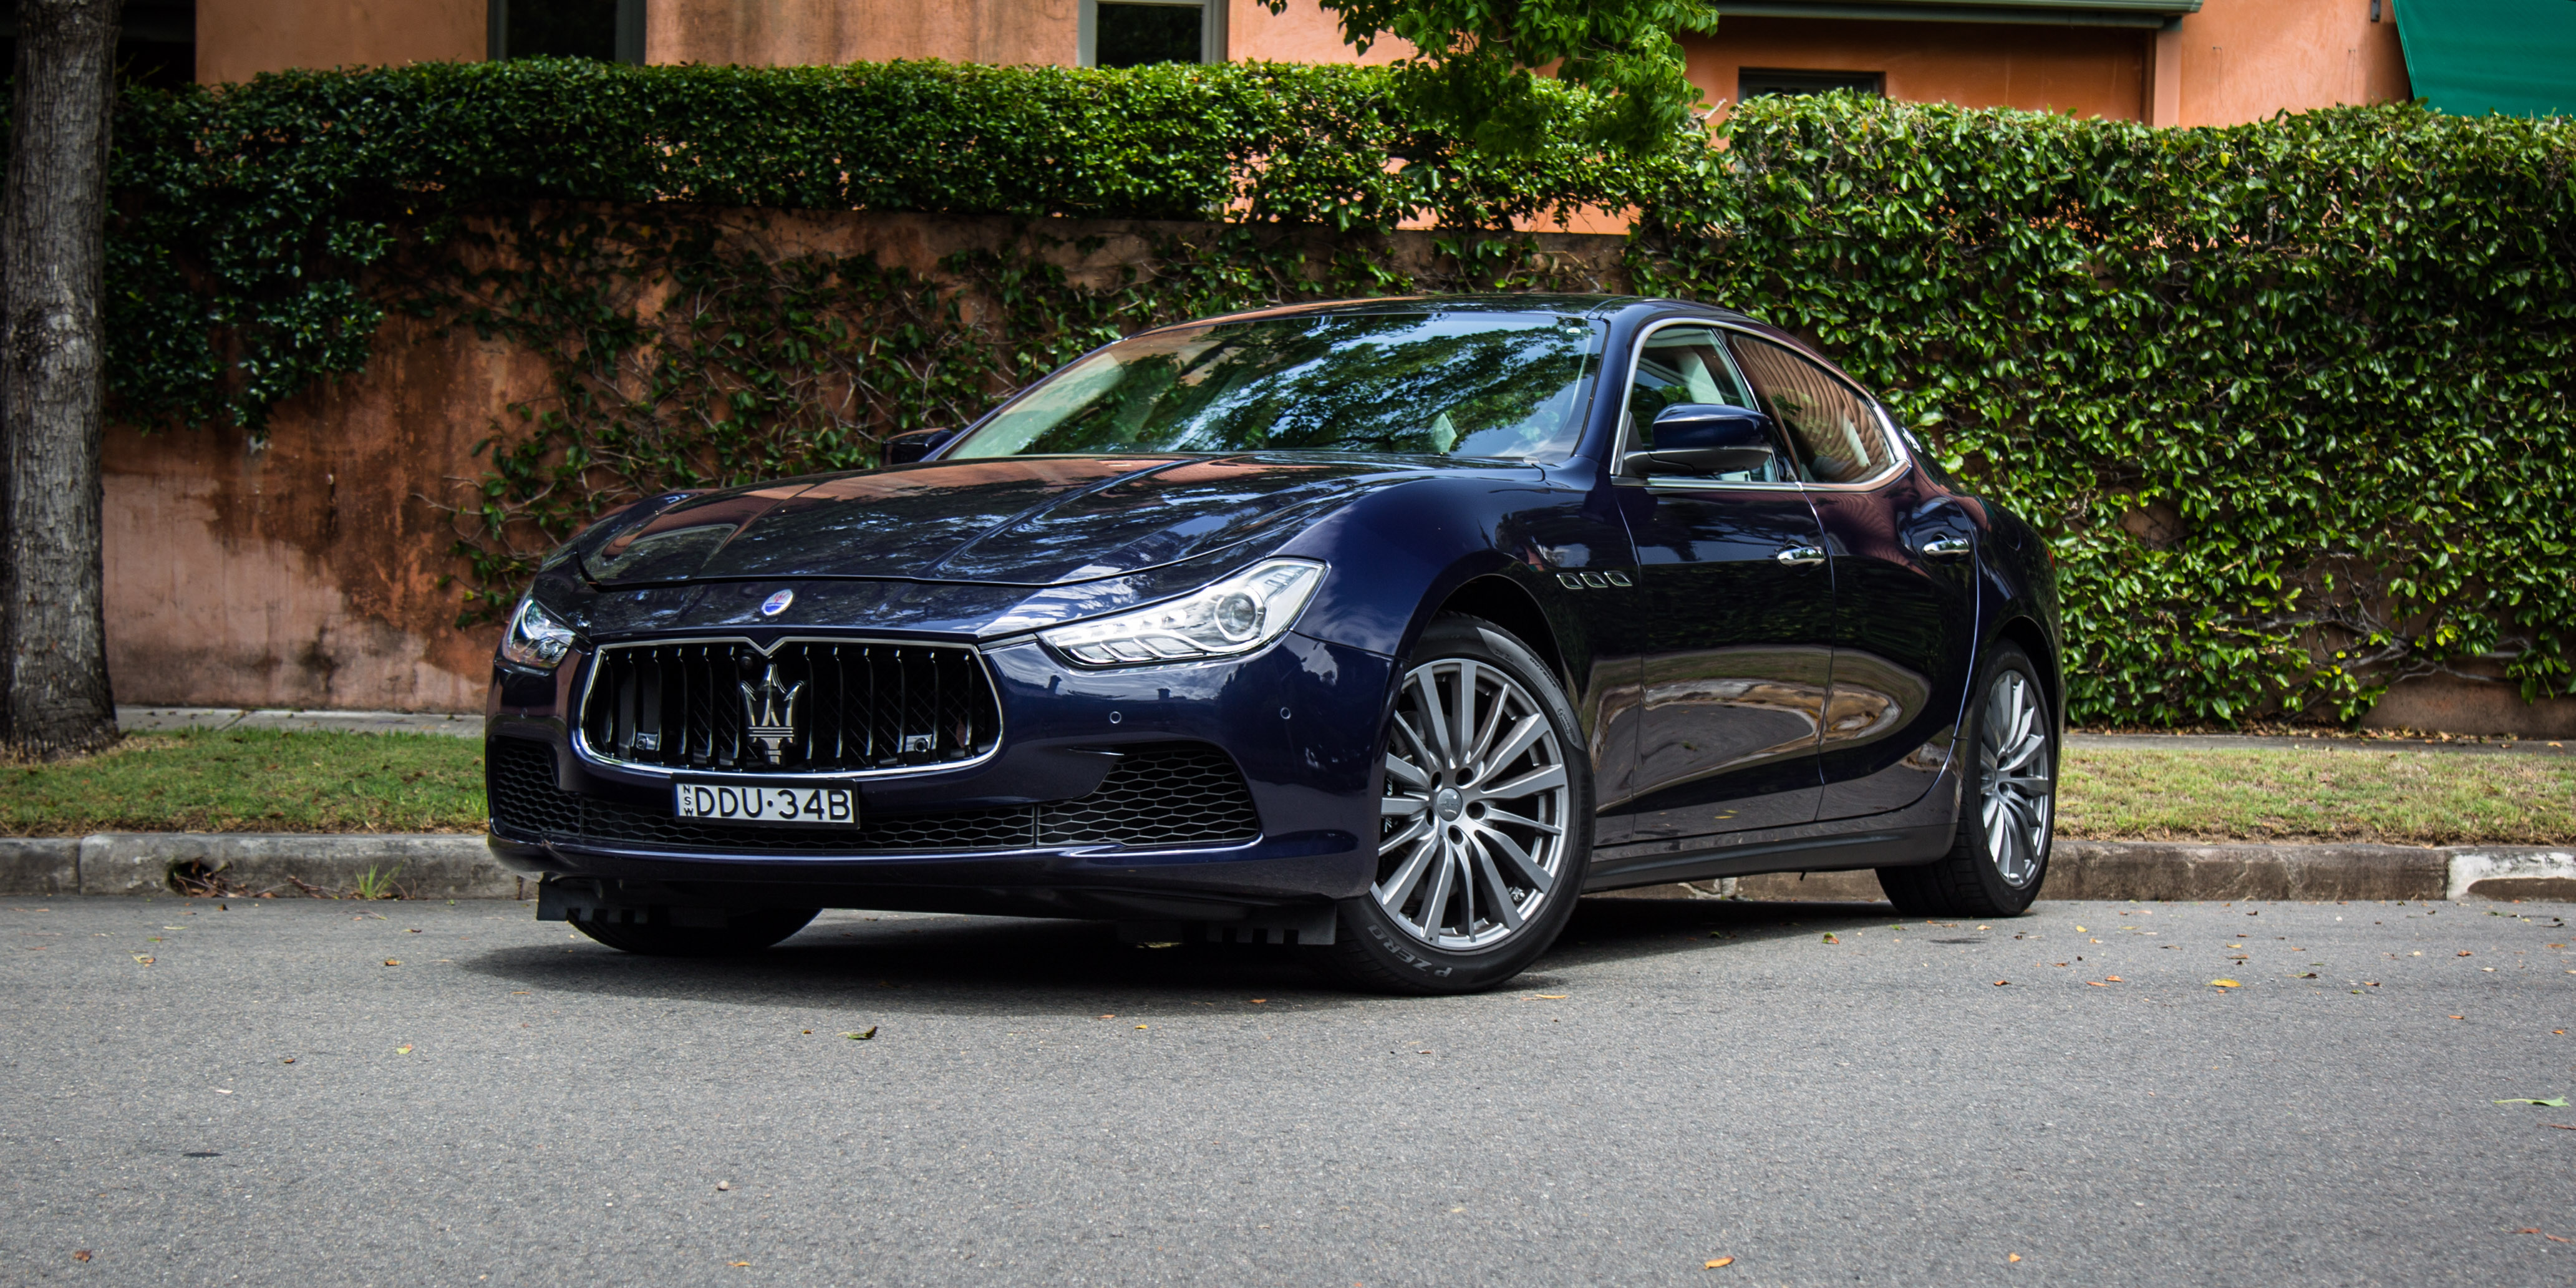 Maserati Ghibli exterior photo